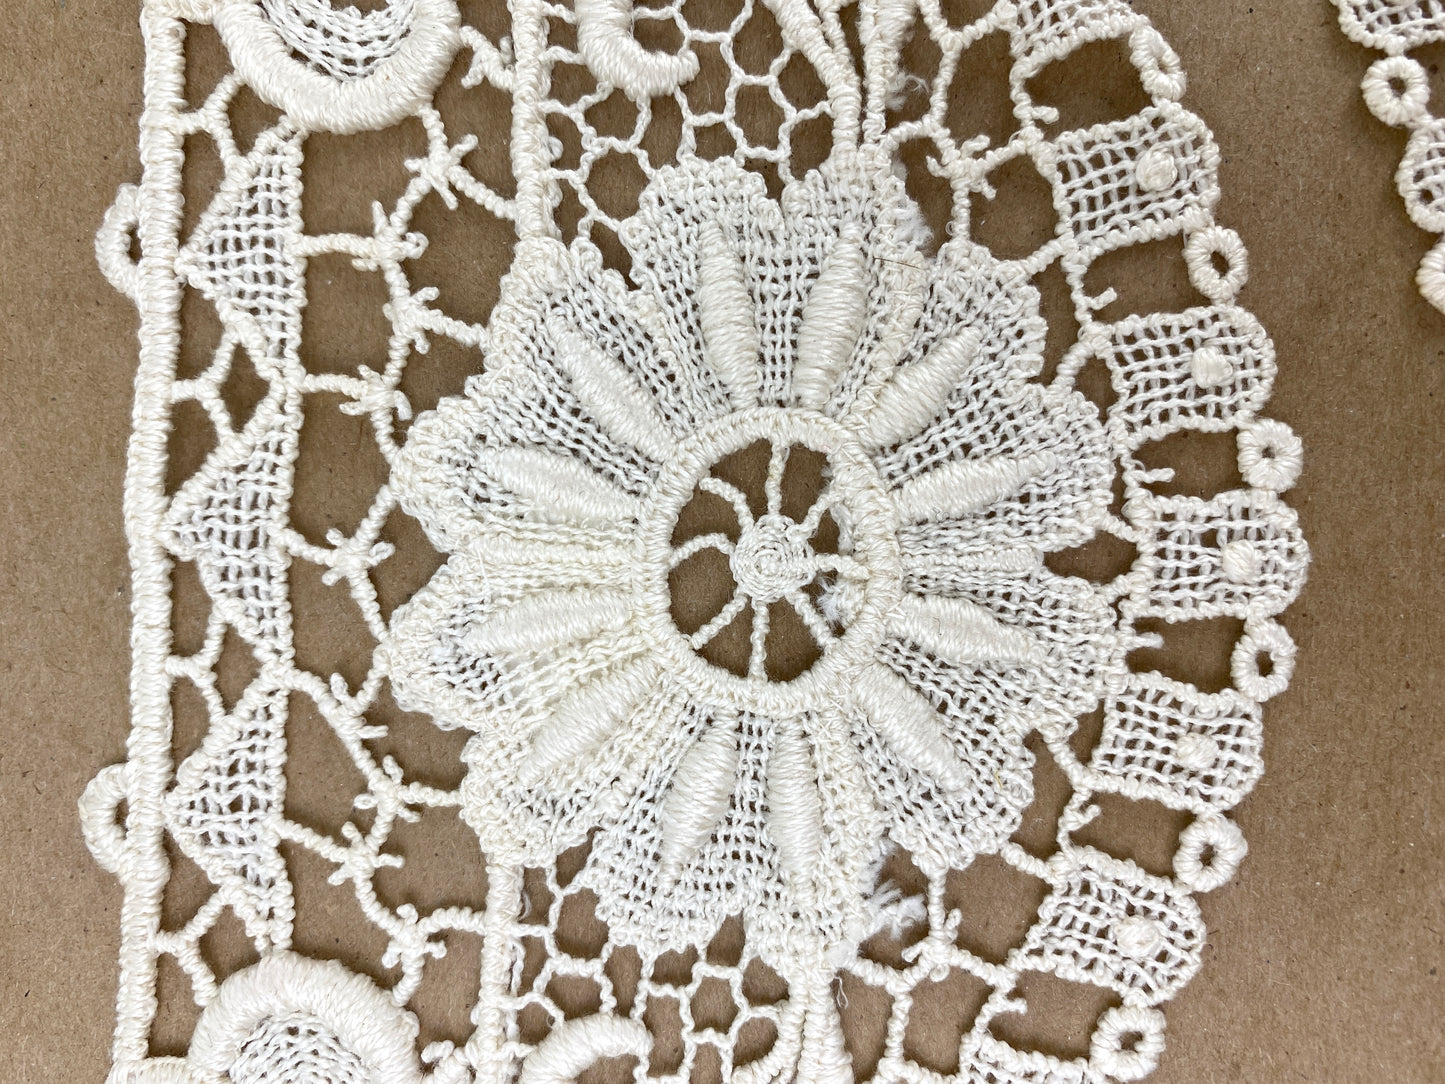 Antique Edwardian White Crochet Lace Collar & Matching Cuffs Set